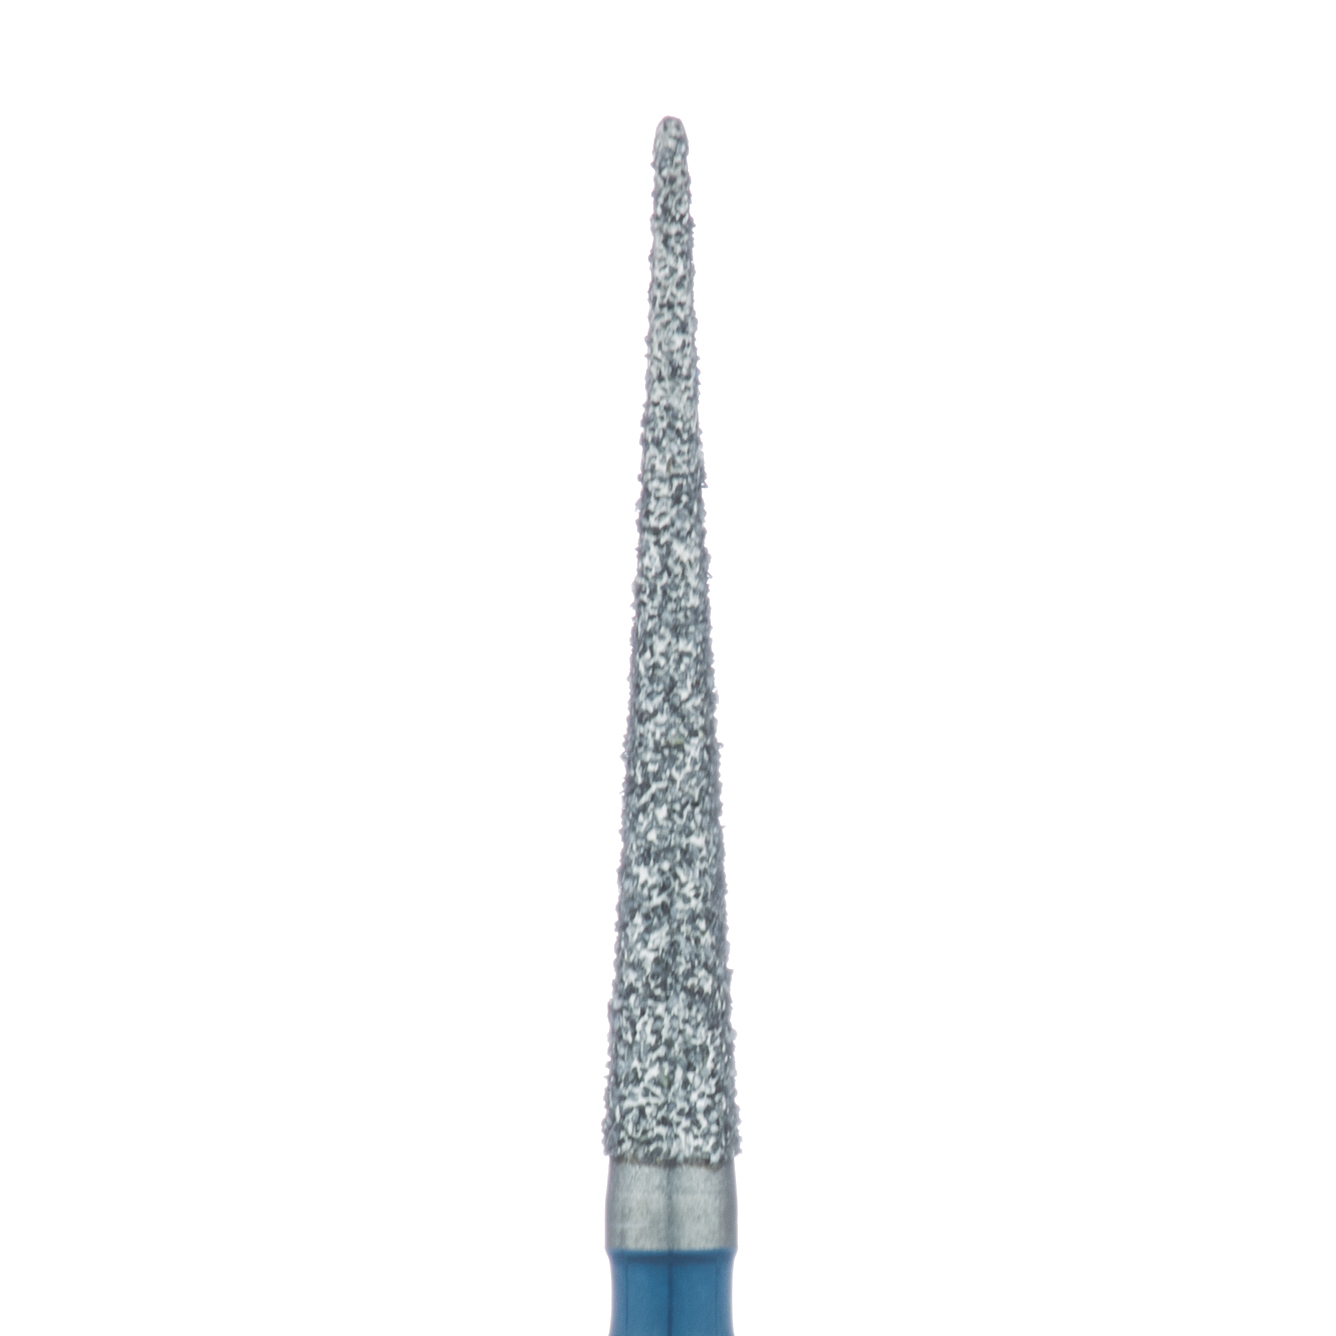 859L-016-FG Long Needle Diamond Bur, Interproximal Reduction, 1.6mm Ø, Medium, FG